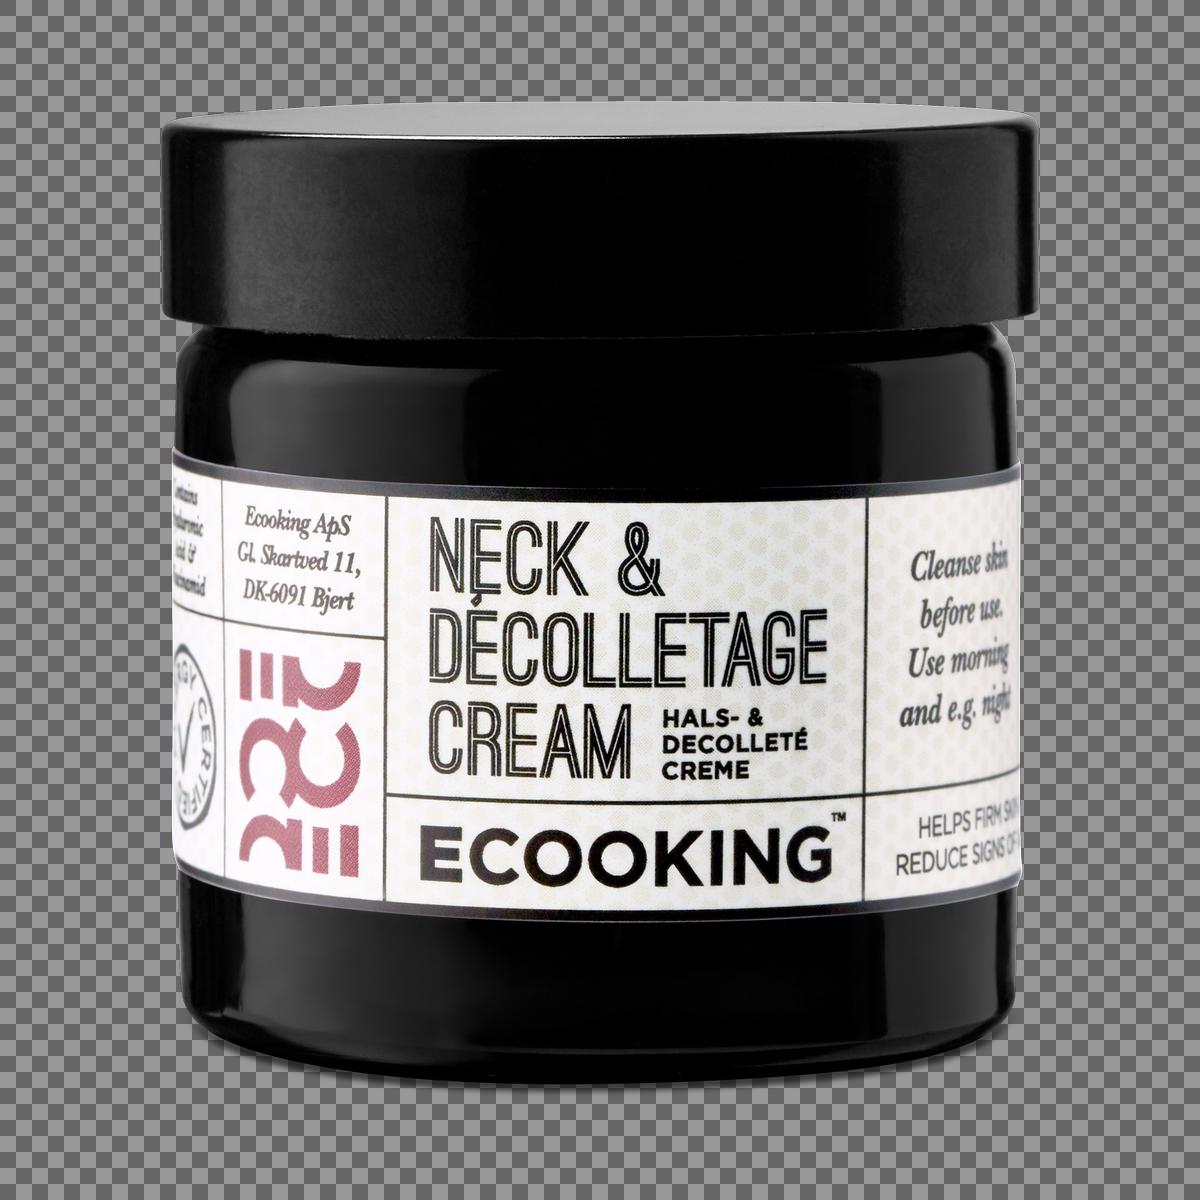 Ecooking Neck and Decolletage Cream, 50ml